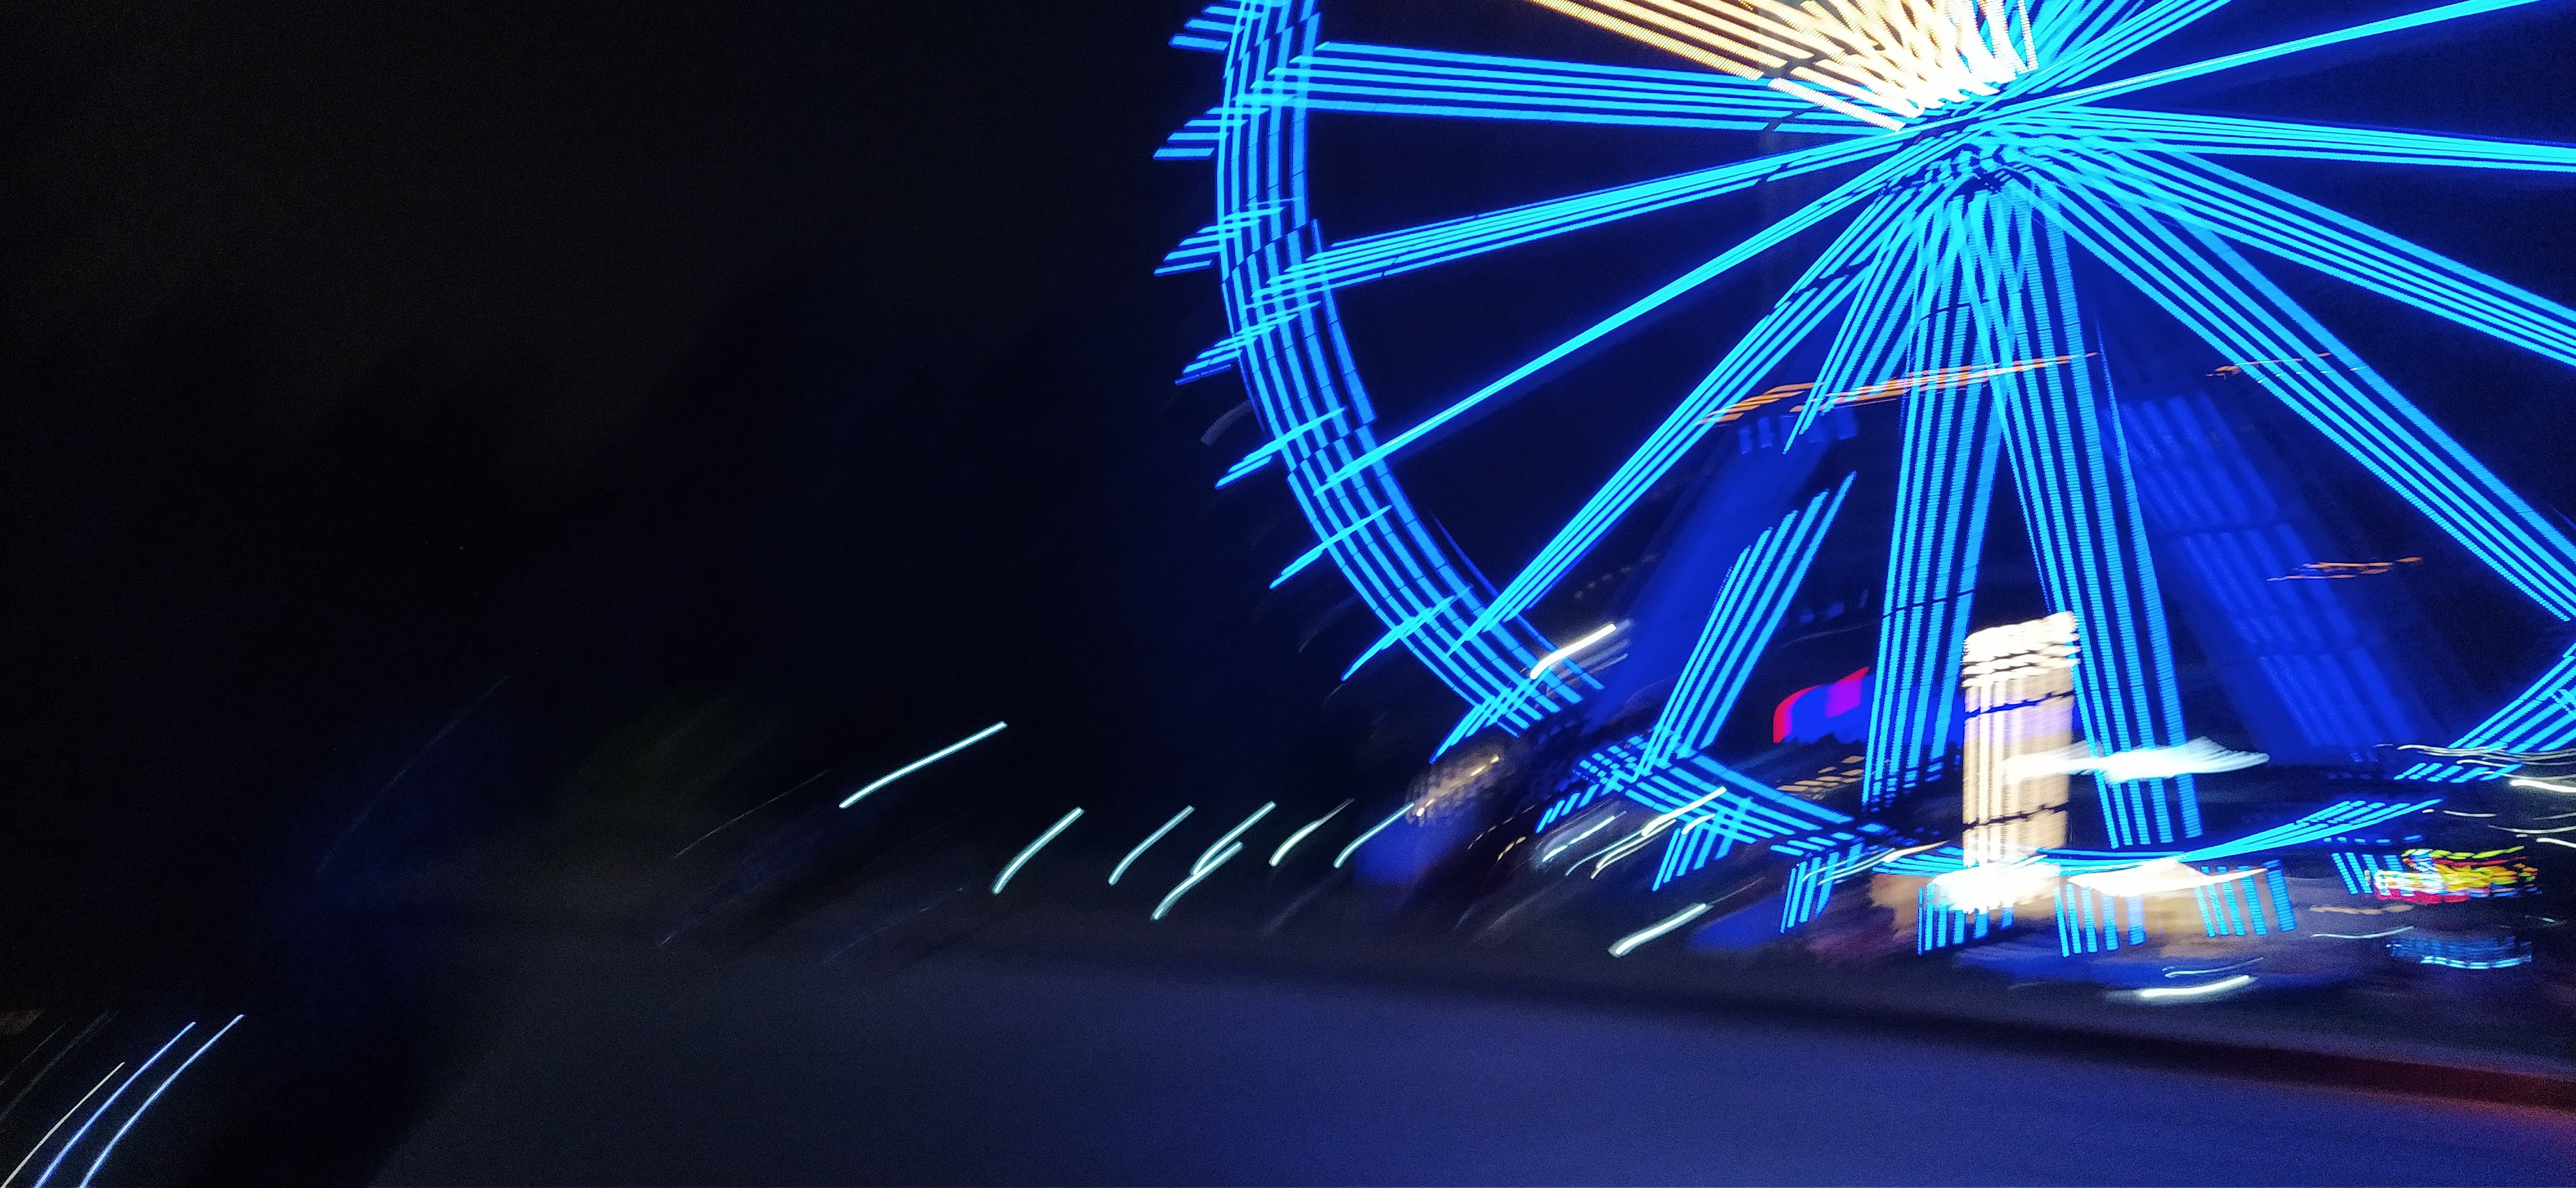 Two Rivers Mall Ferris Wheel - Night View5